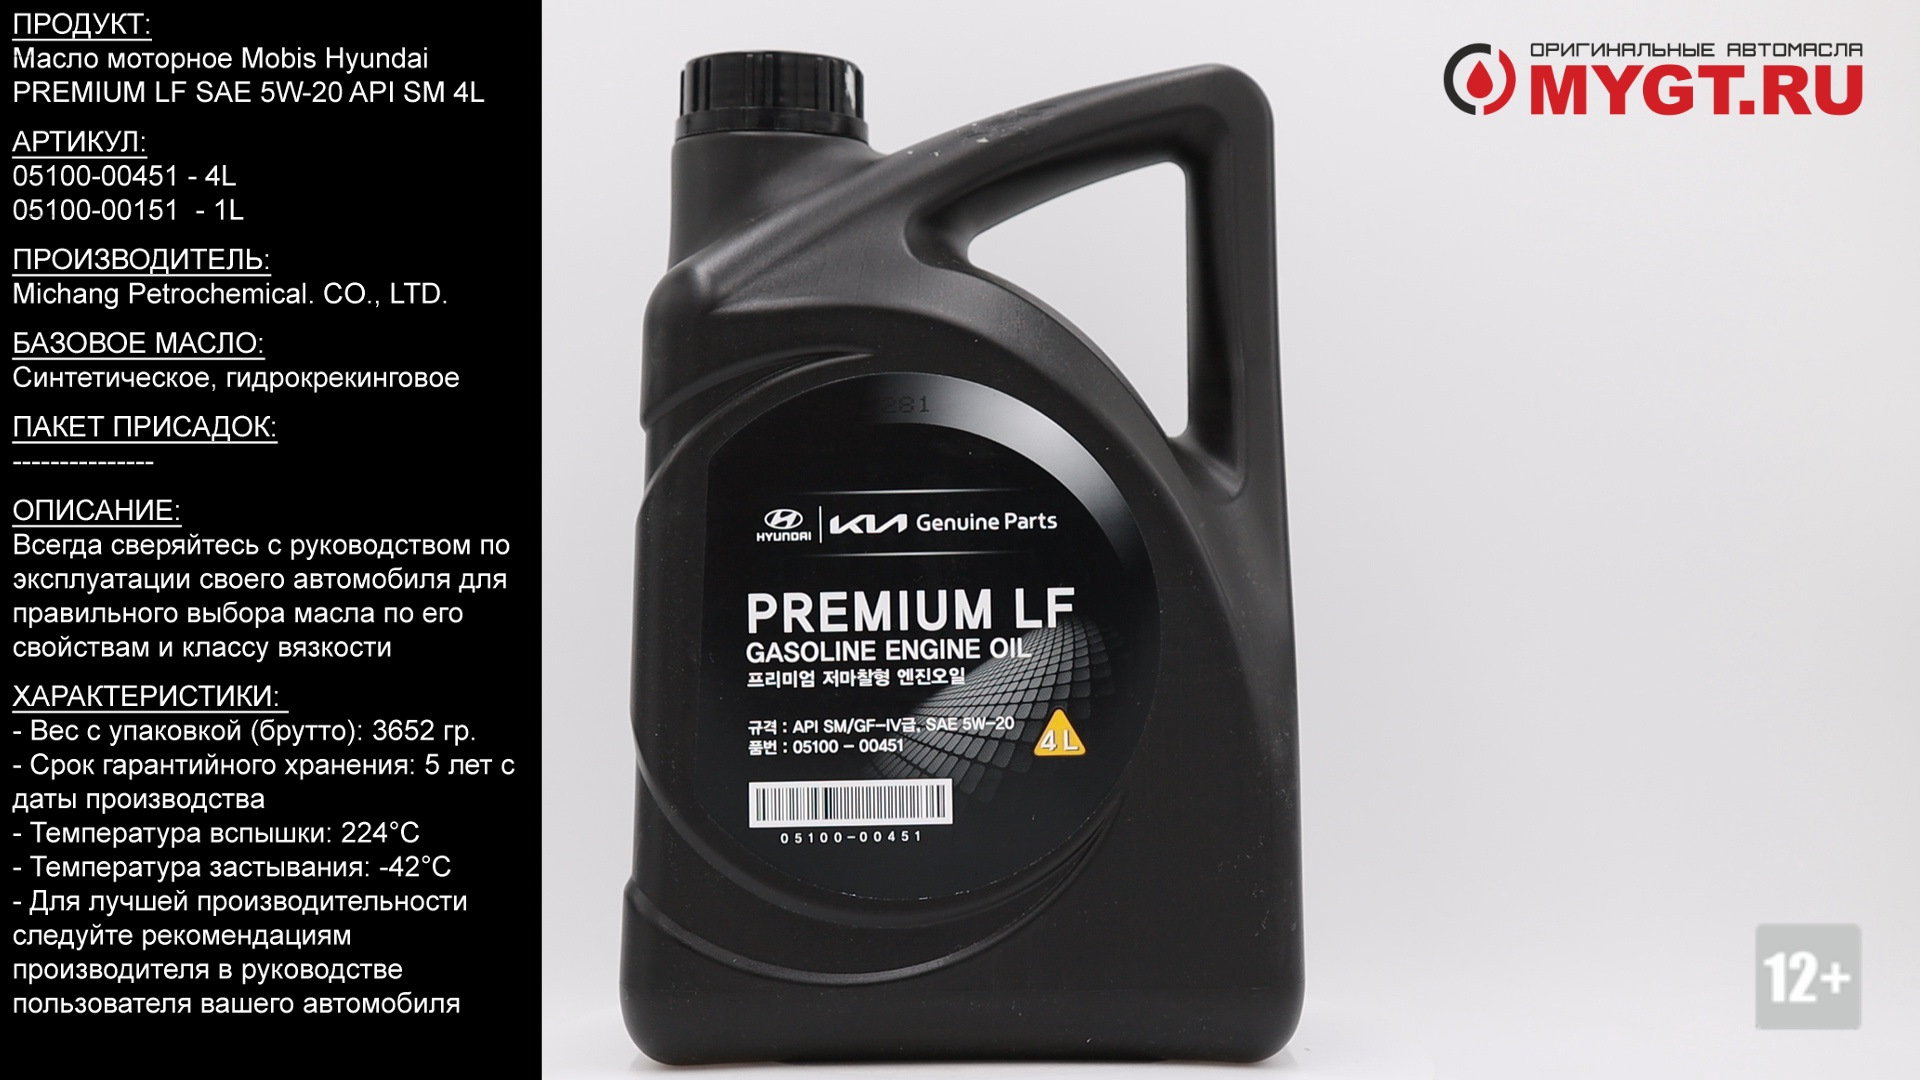 Хендай срок службы. Hyundai/Kia Premium LF 5w20. Mobis Premium gasoline 5w-20 синтетика. Оригинальное моторное масло Hyundai 5w30 Premium LF. Kia Premium LF gasoline 5w-30.